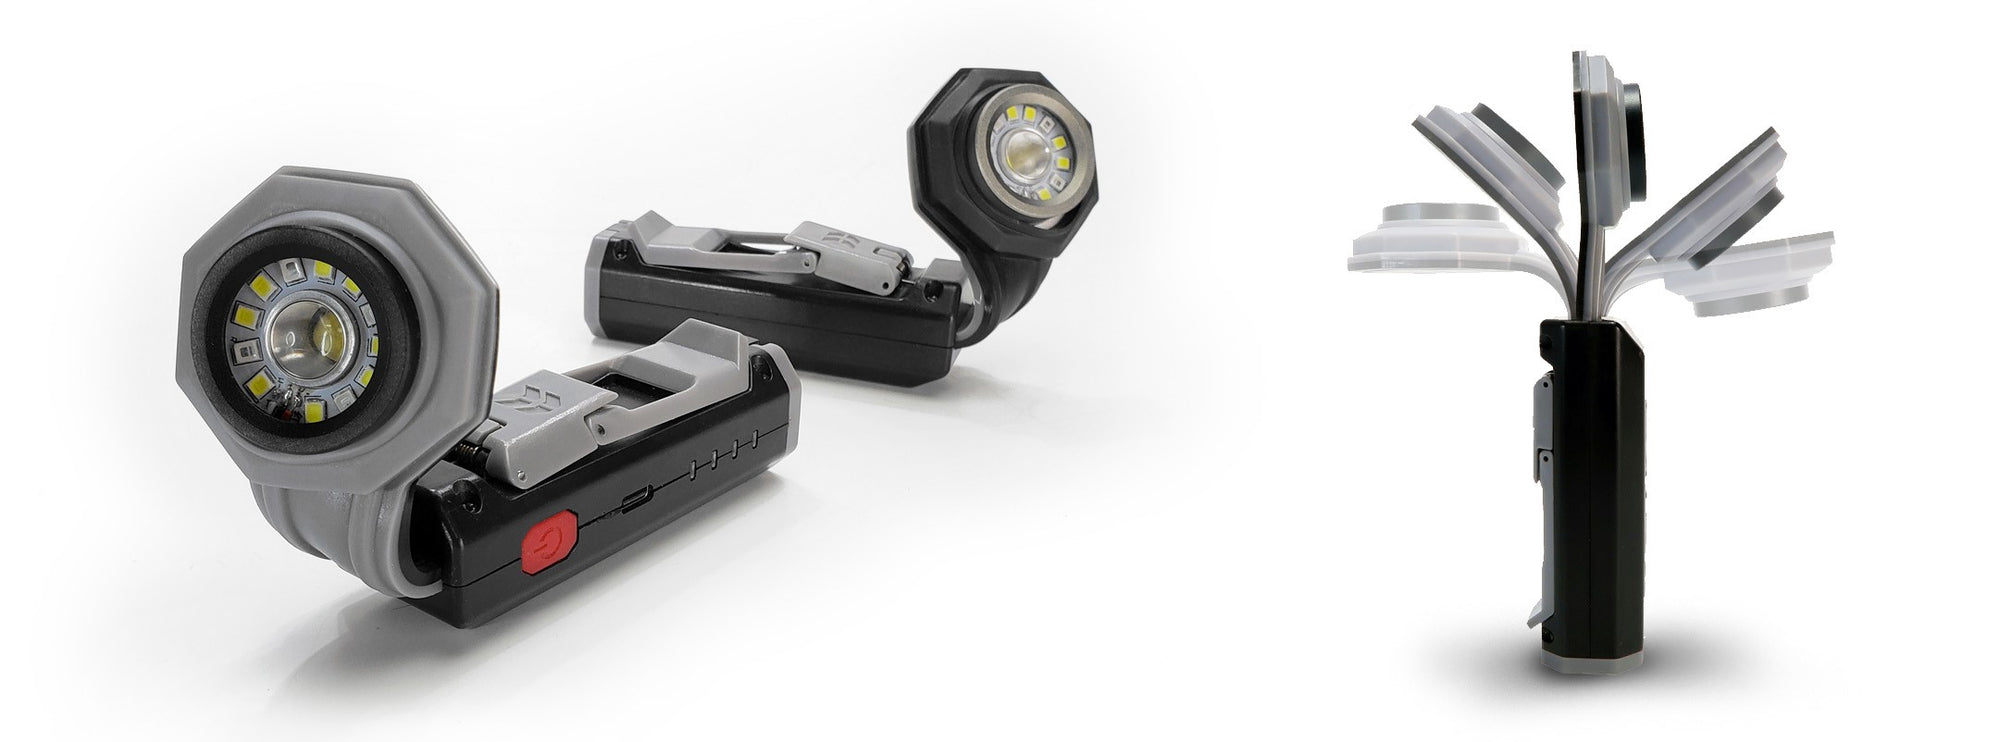 STKR Concepts FLEXIT Pocket Light 4.0 and 6.5 LED flashlight and multi-use handsfree task light